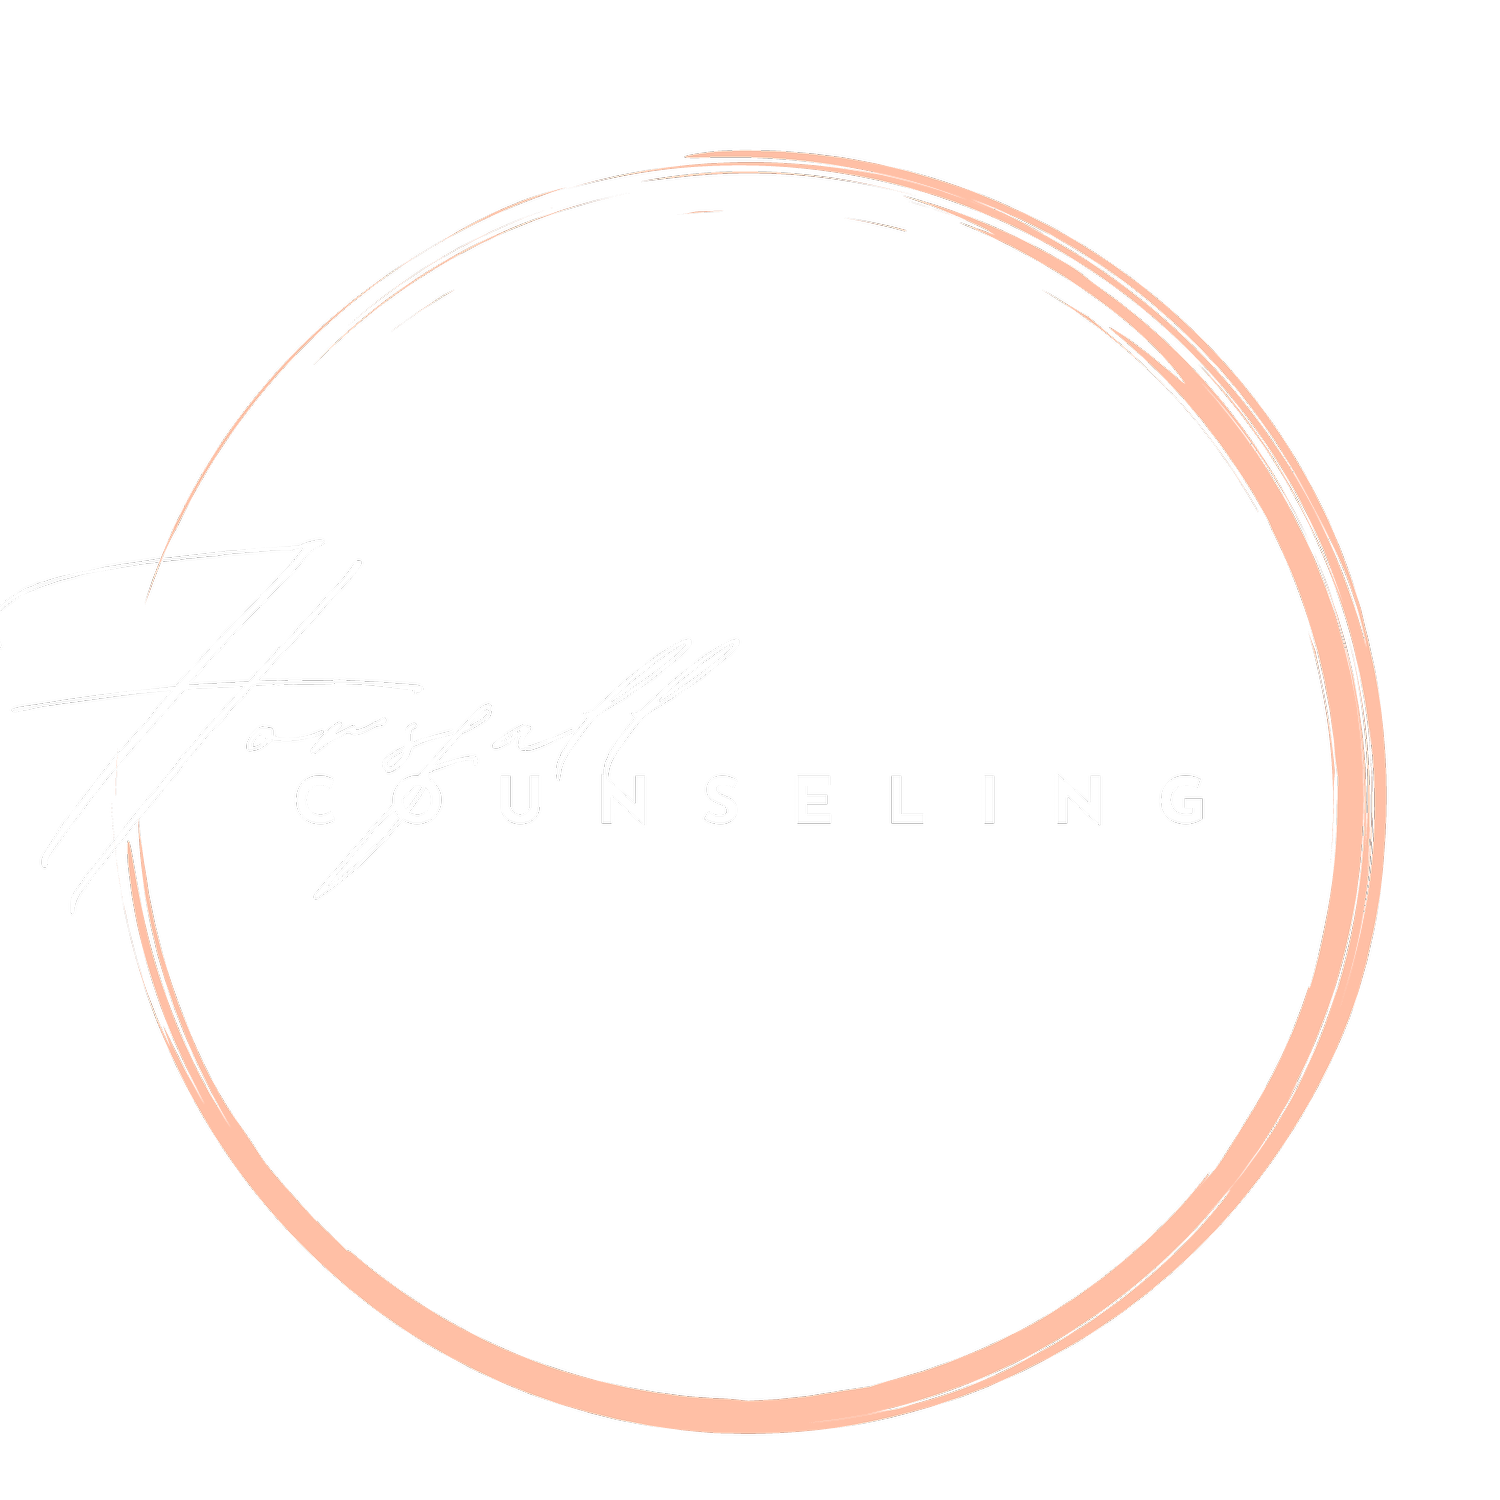 Horsfall Counseling, LLC